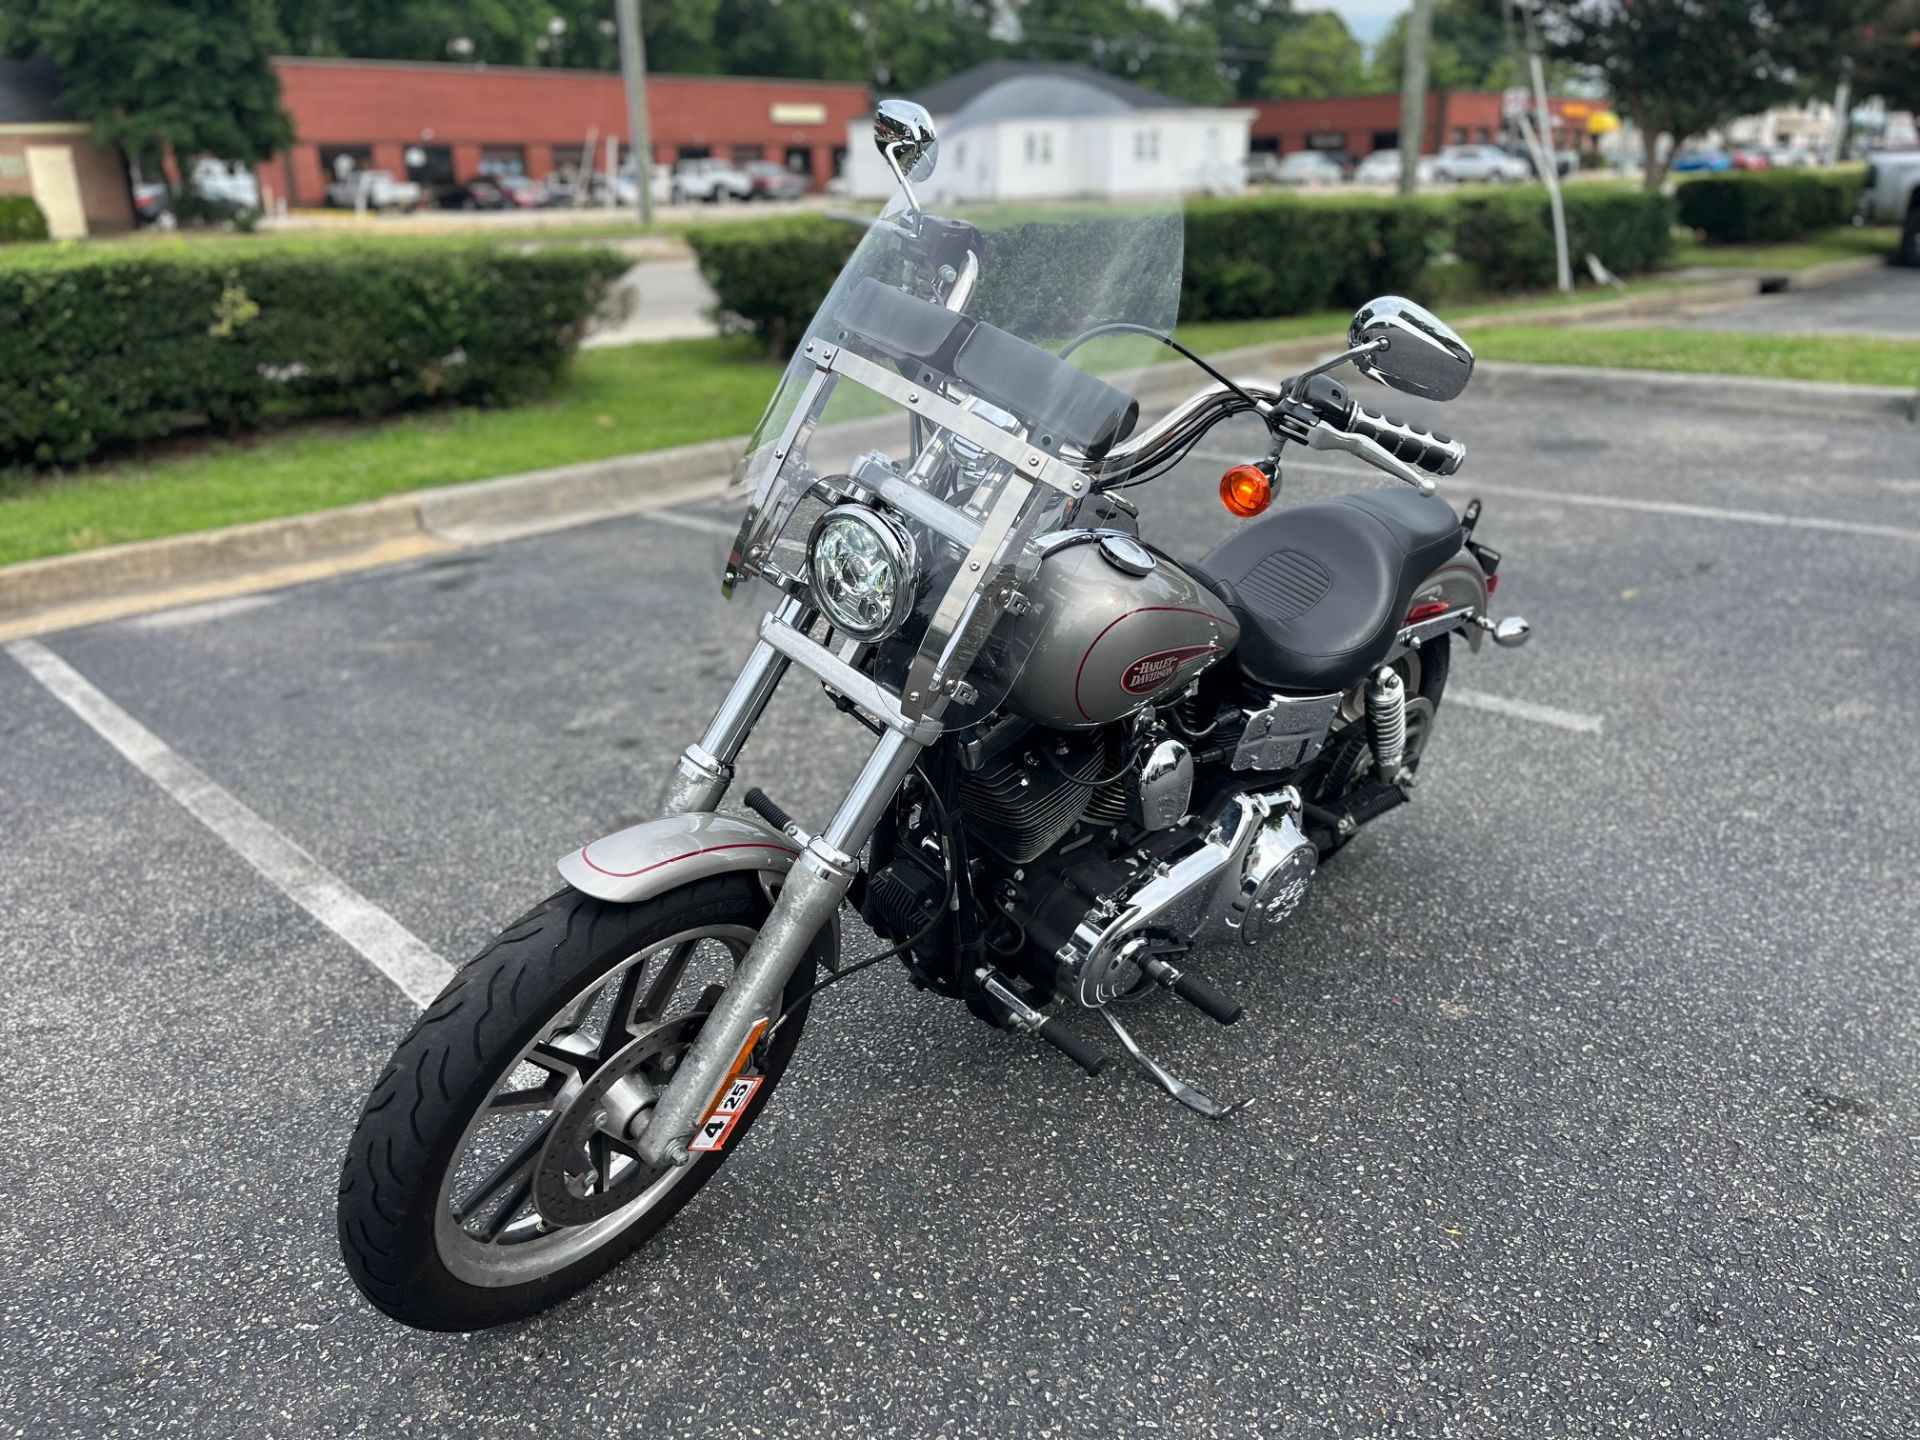 2007 Harley-Davidson FXDL Dyna® Low Rider® in Virginia Beach, Virginia - Photo 8